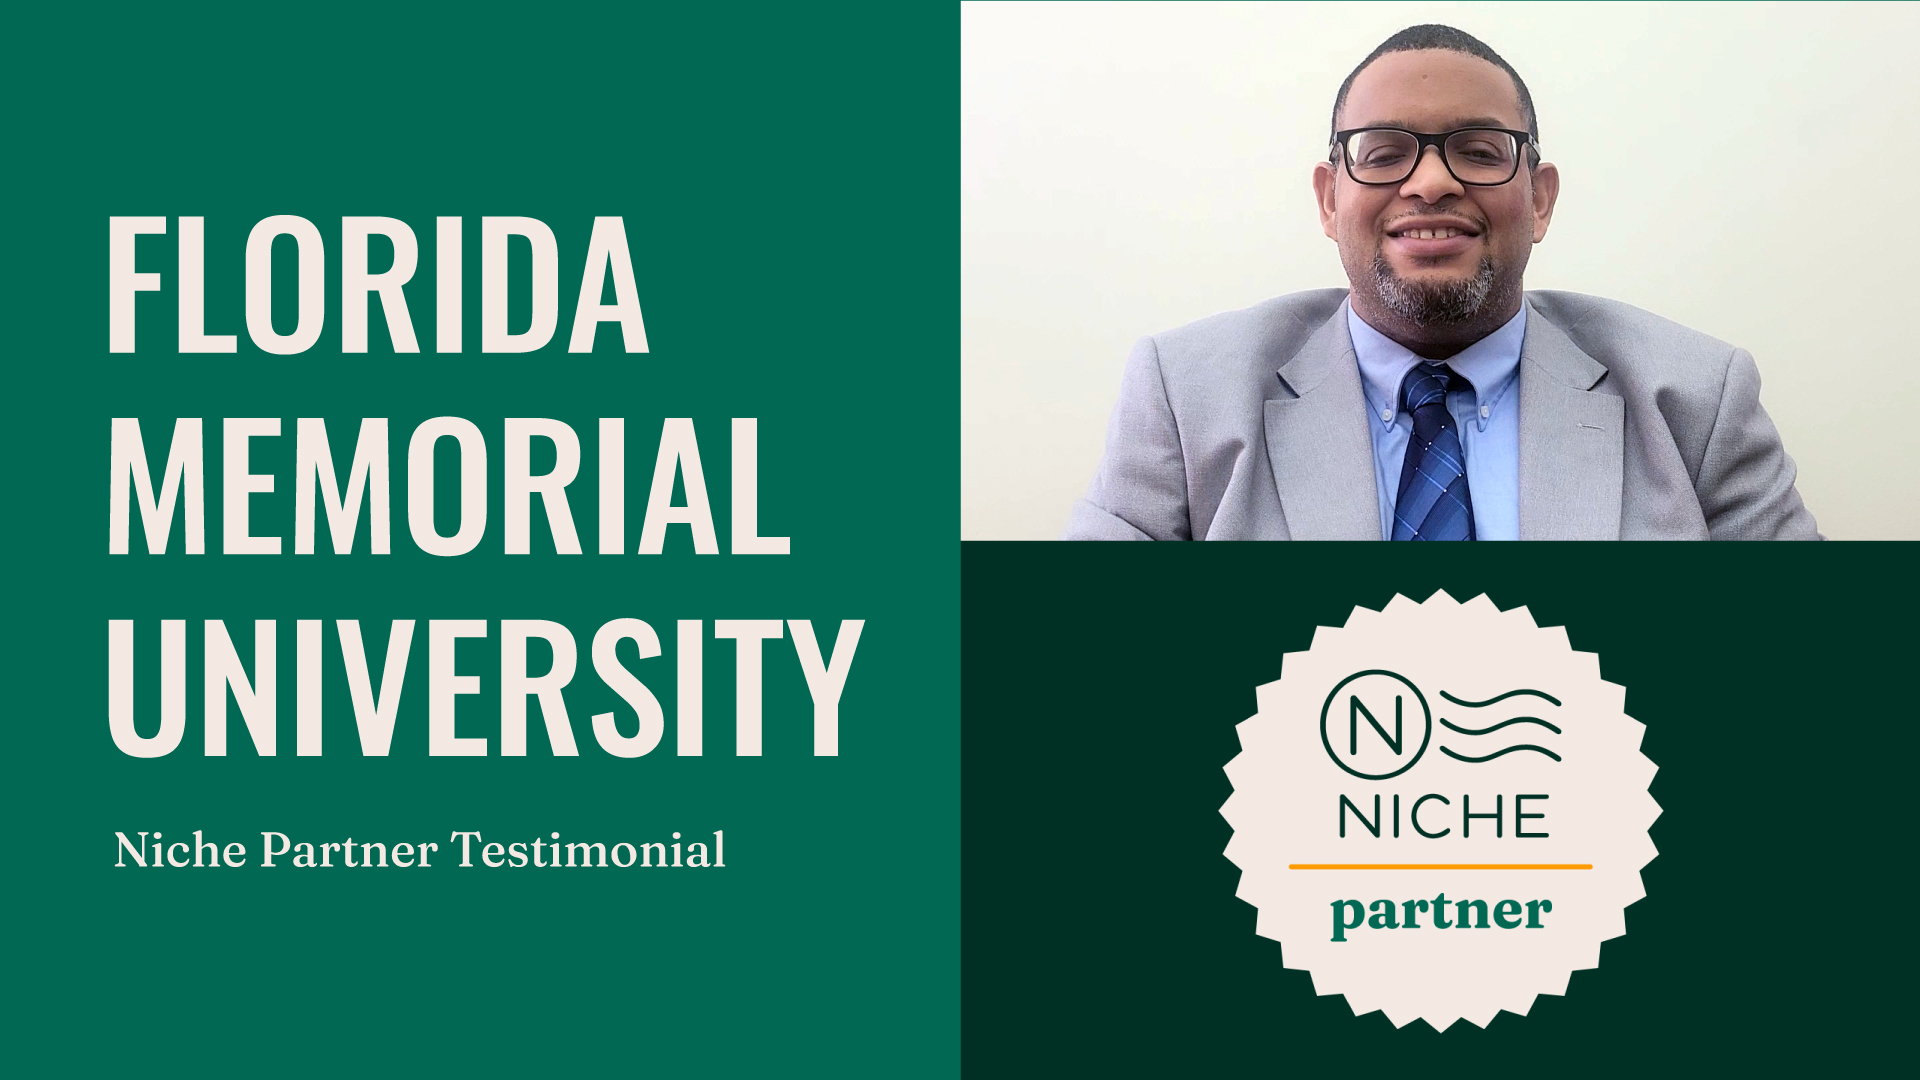 Florida Memorial University and Niche